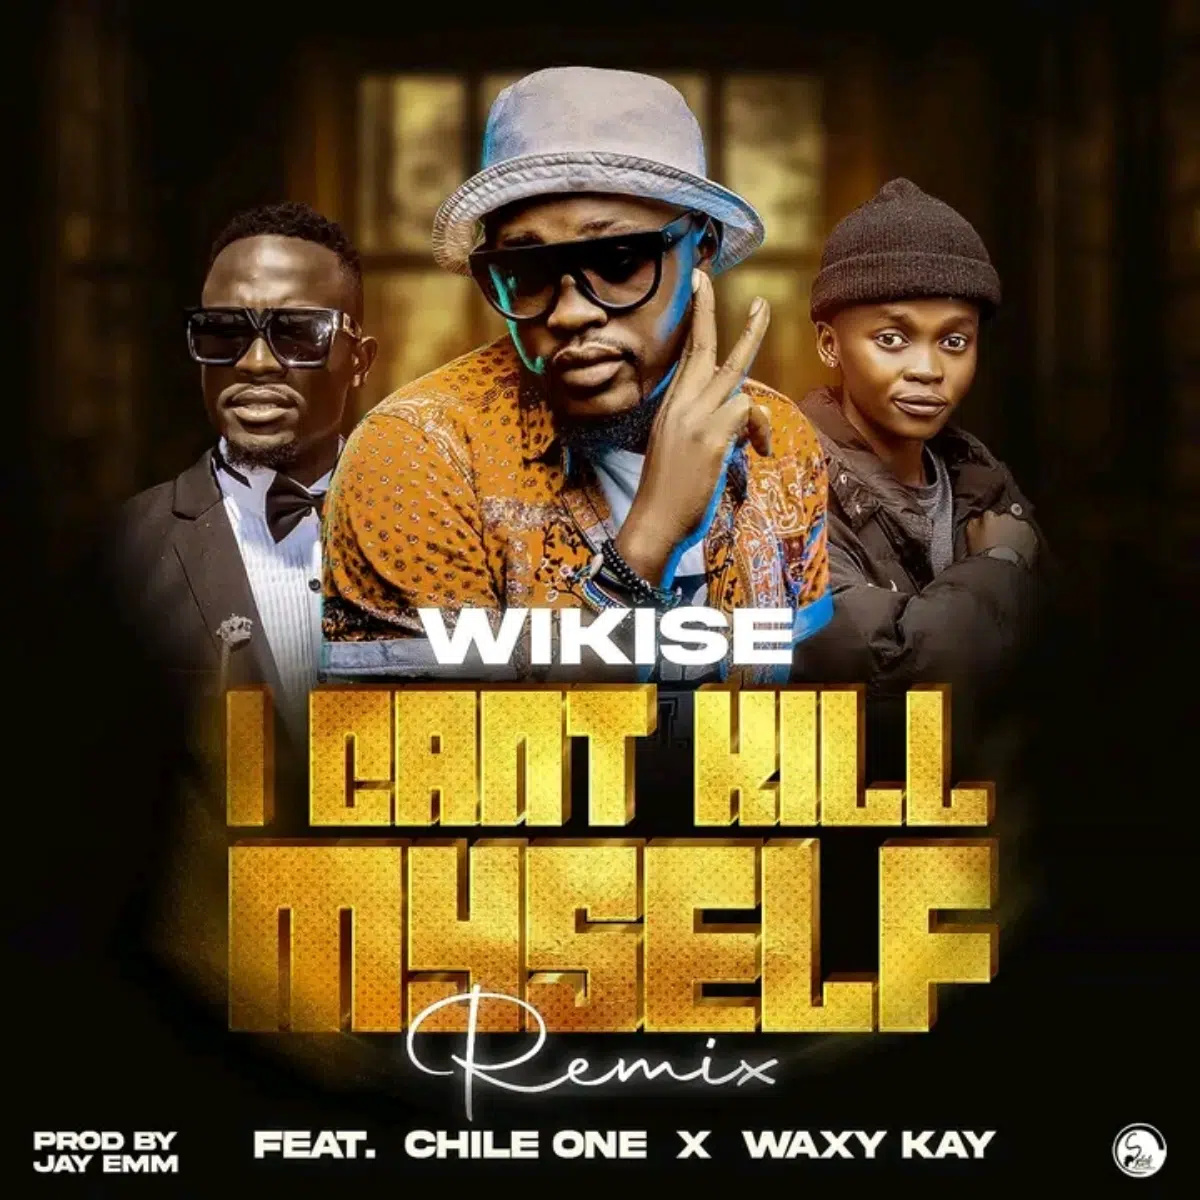 DOWNLOAD: Wikise Ft. Waxy kay & Chile One Mr Zambia – “I Can’t Kill Myself” (Remix) Mp3